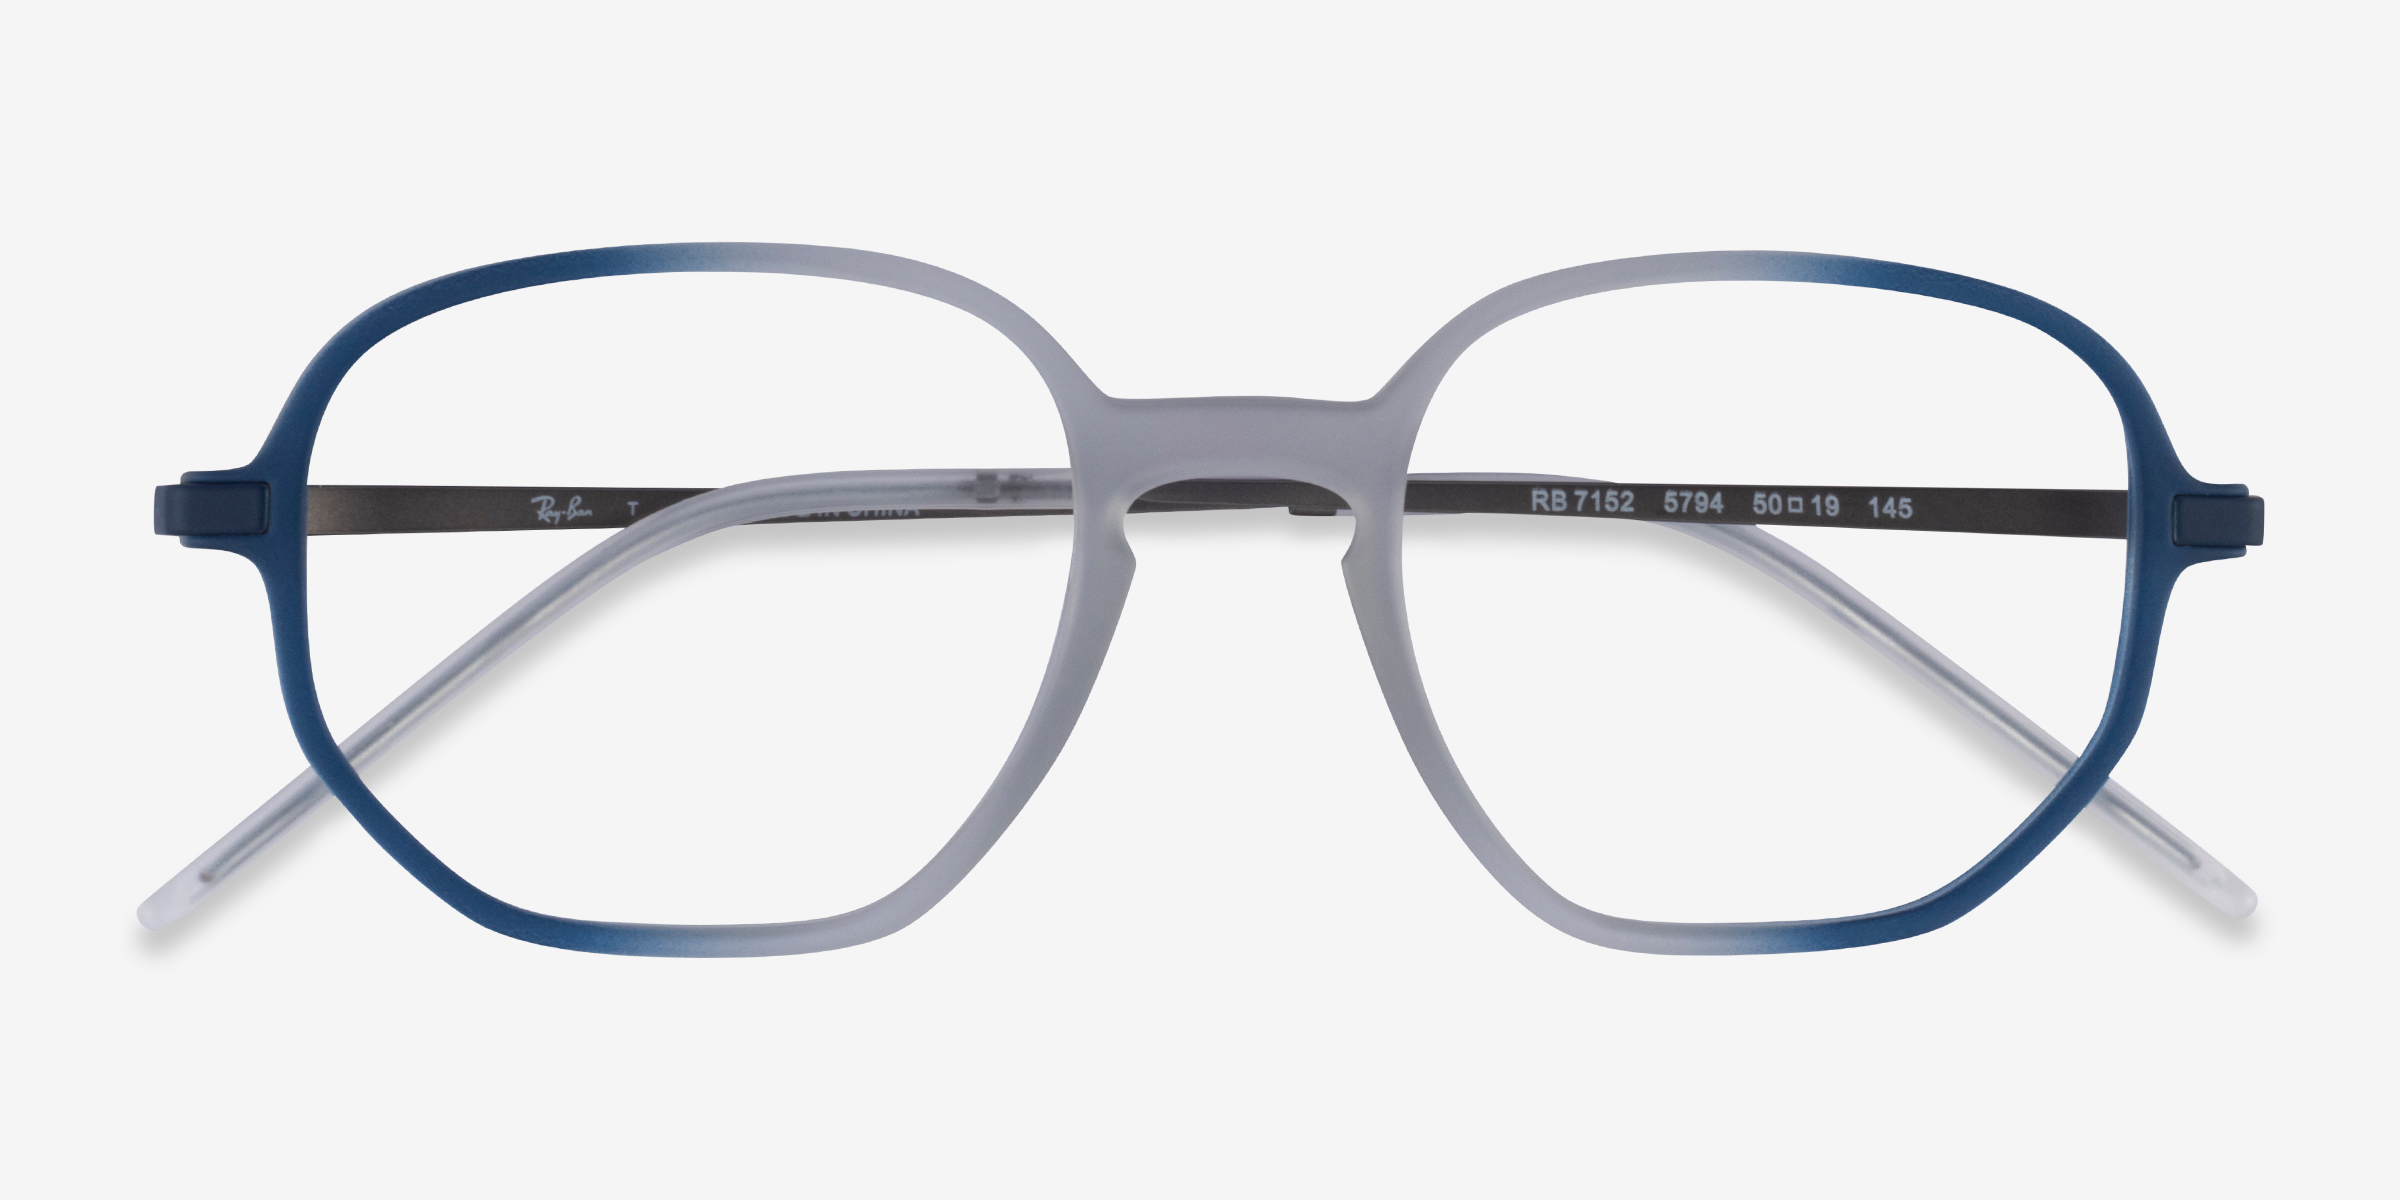 Ray-Ban RB7152 - Geometric Clear Blue Frame Eyeglasses | Eyebuydirect